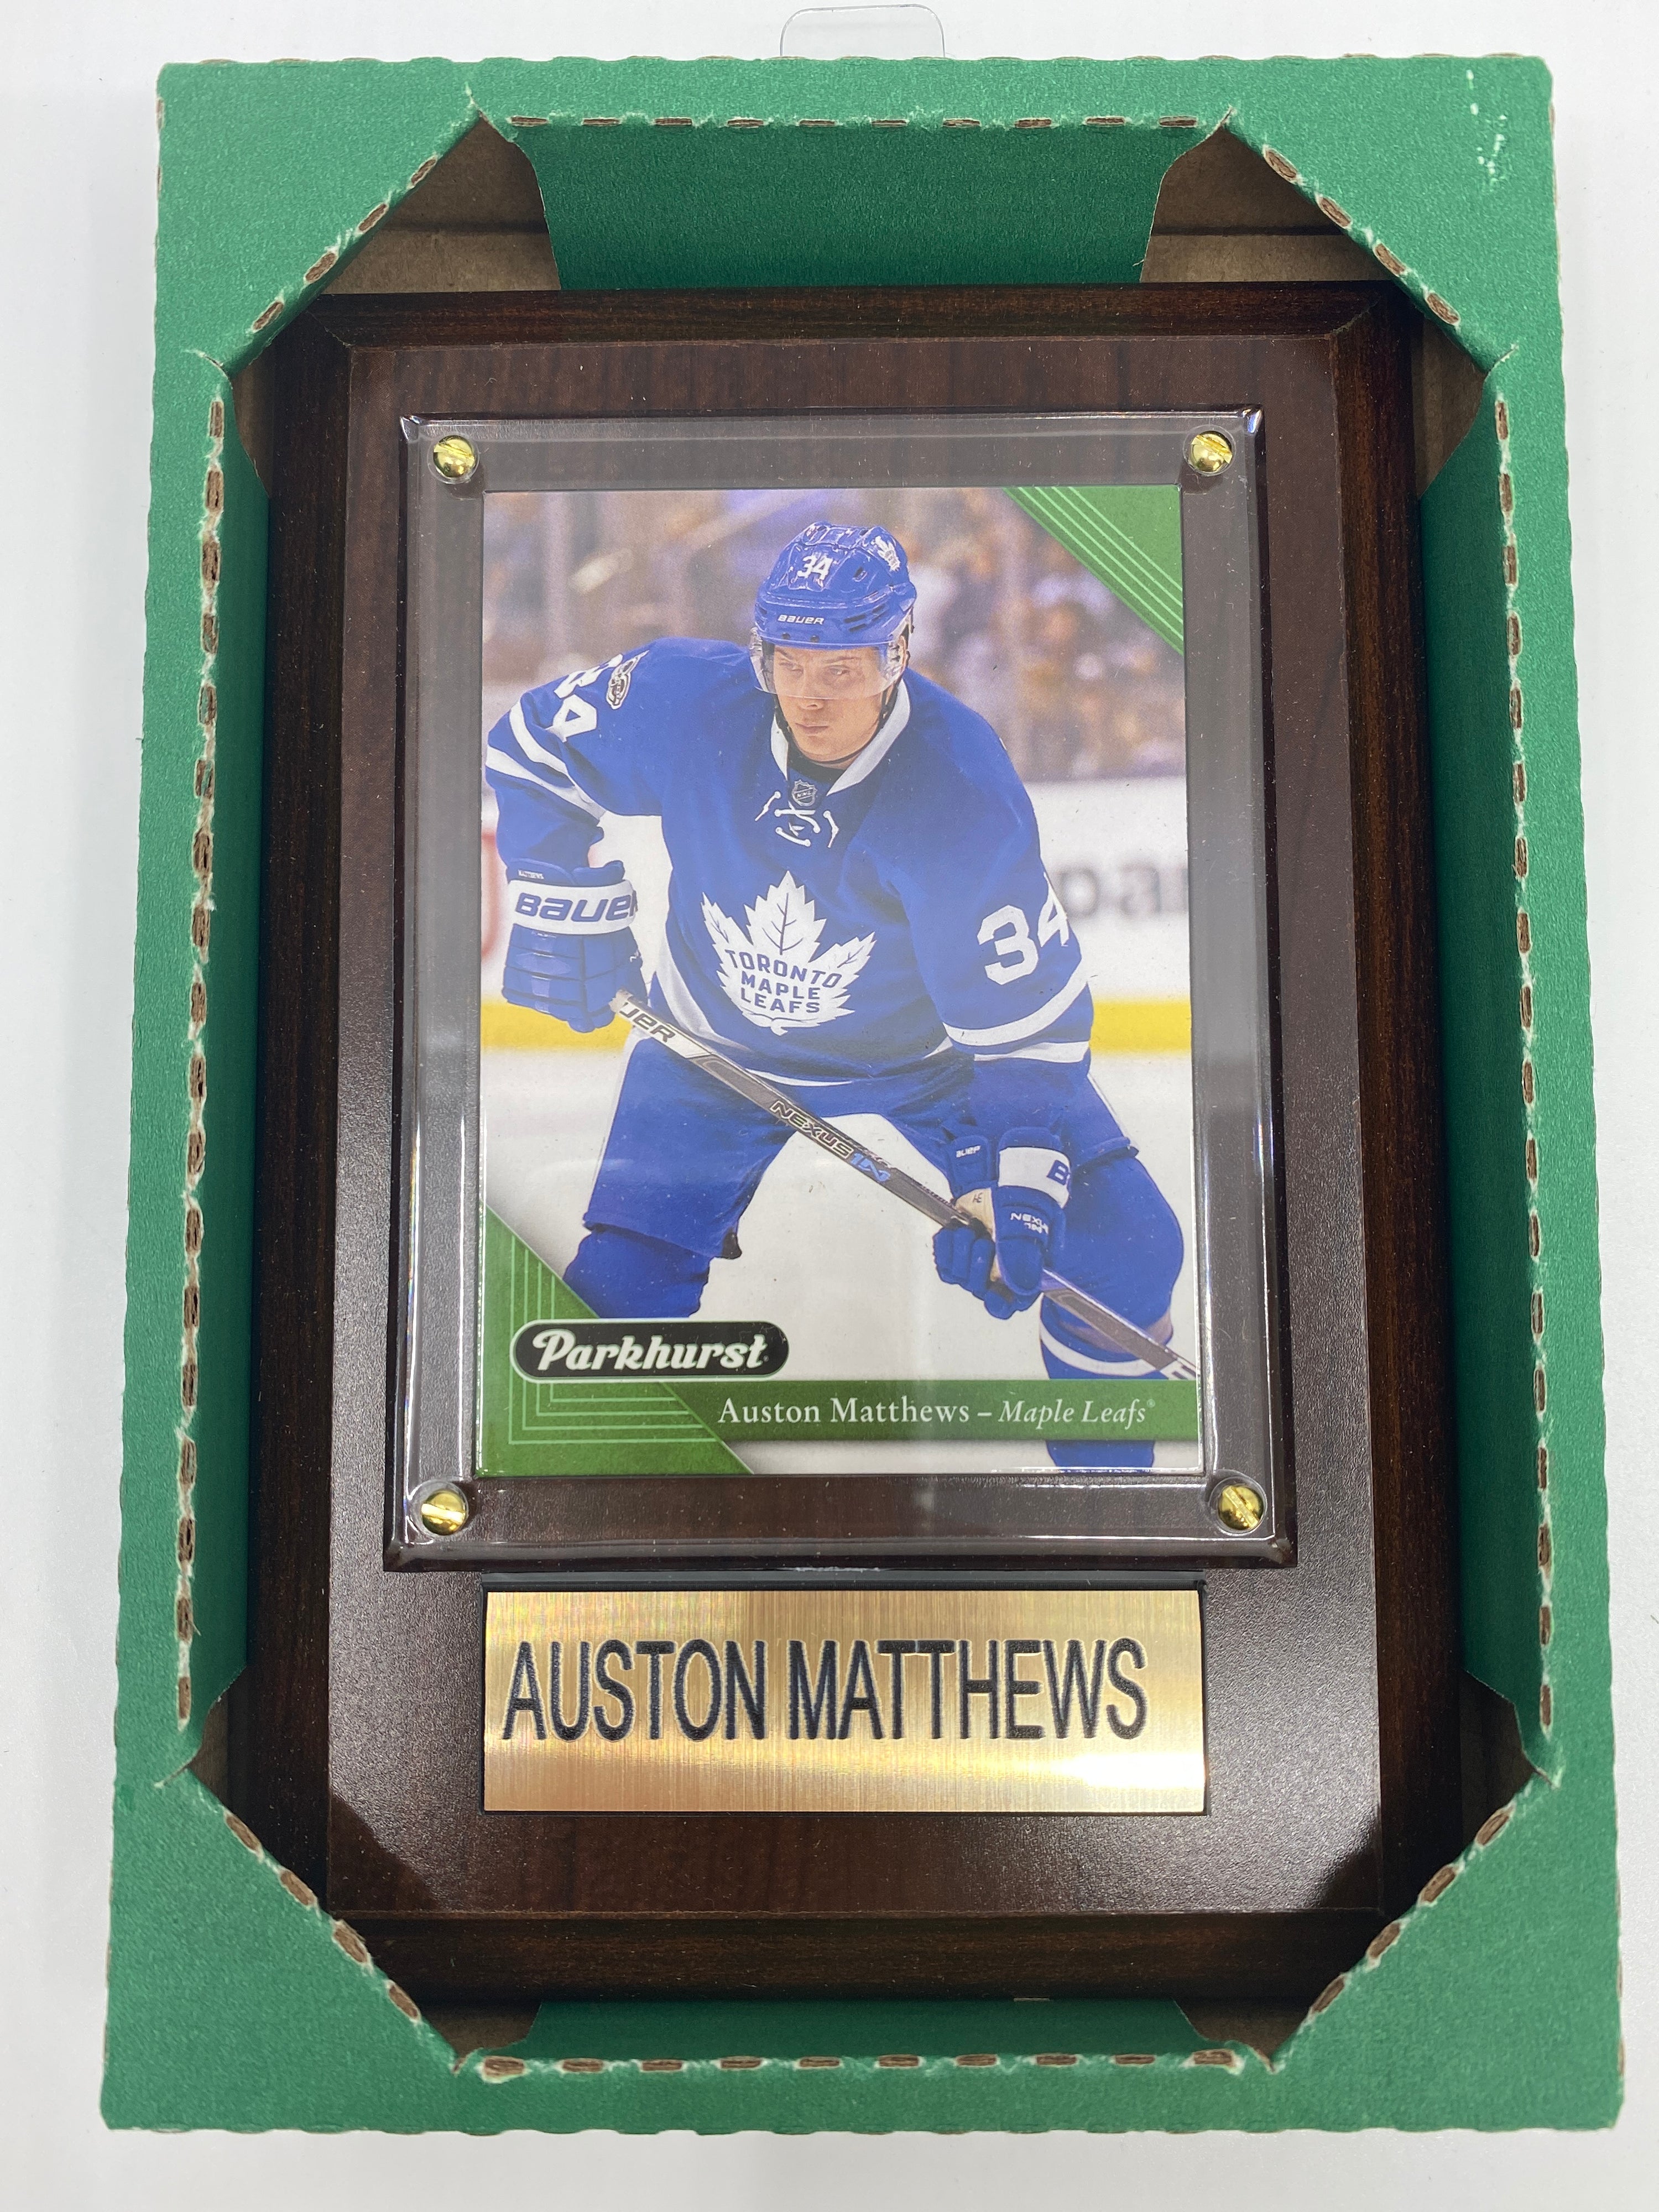 NHL Plaque with card 4x6 Leafs Auston Matthews